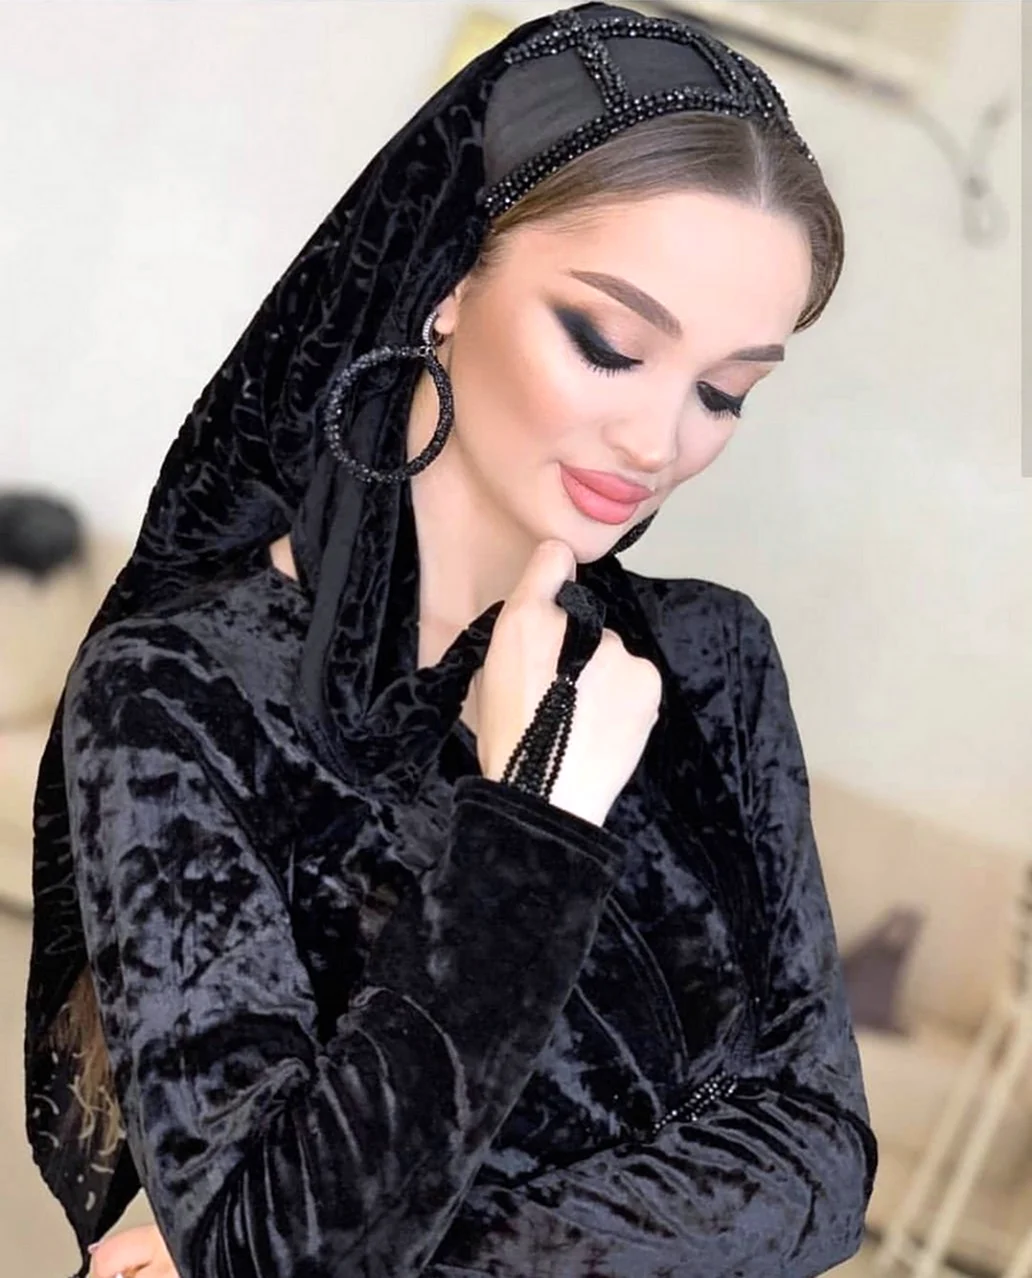 Диана Омарова hidjabe. Красивая девушка